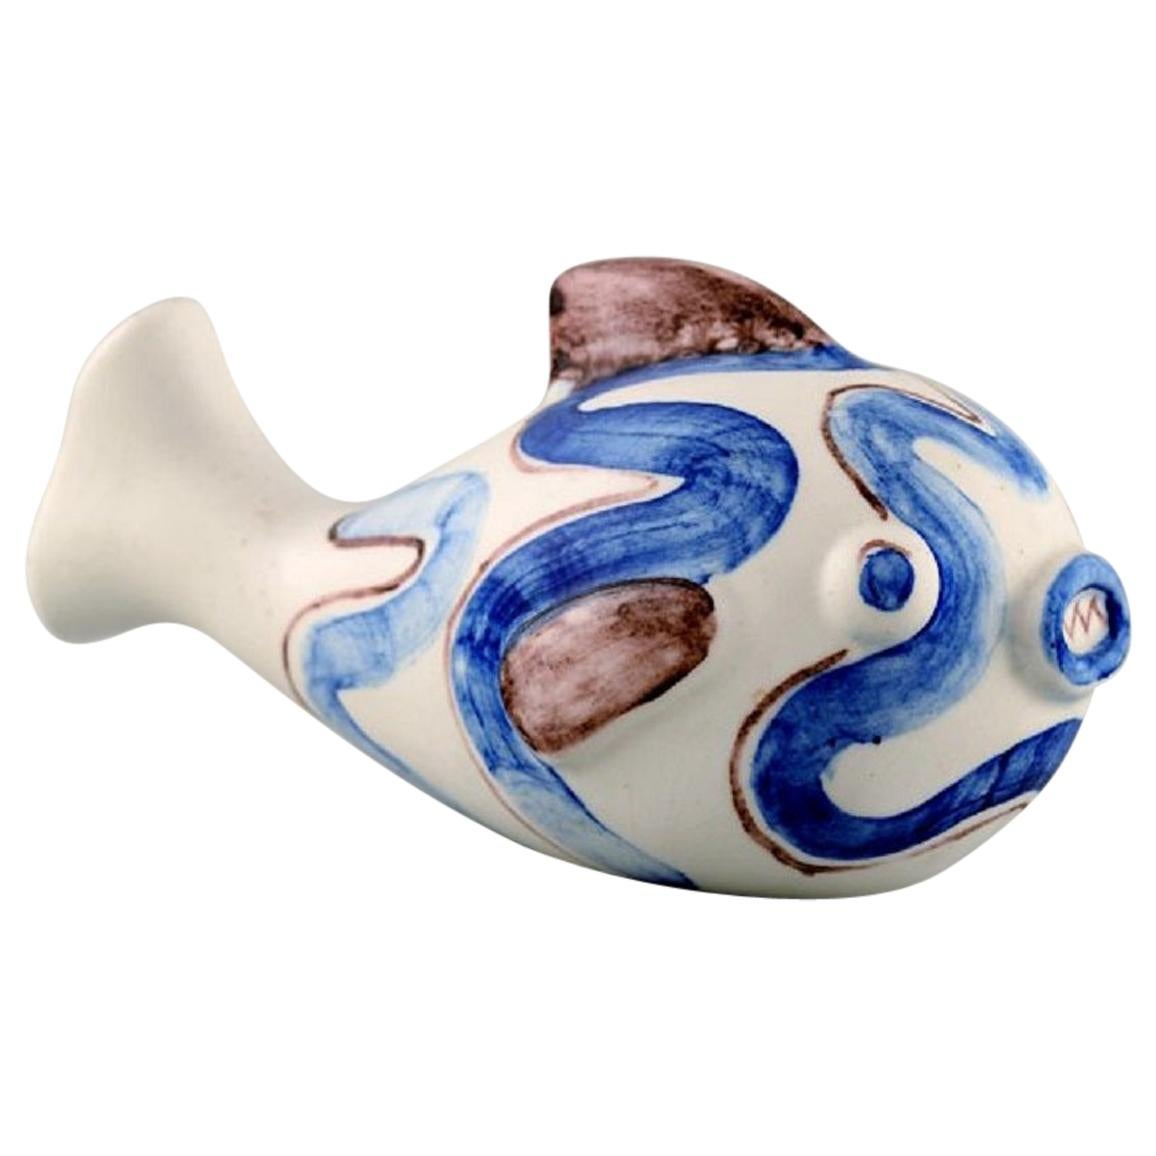 Gun Von Wittrock for Rørstrand, Unique Sculpture, Fish in Glazed Ceramics For Sale